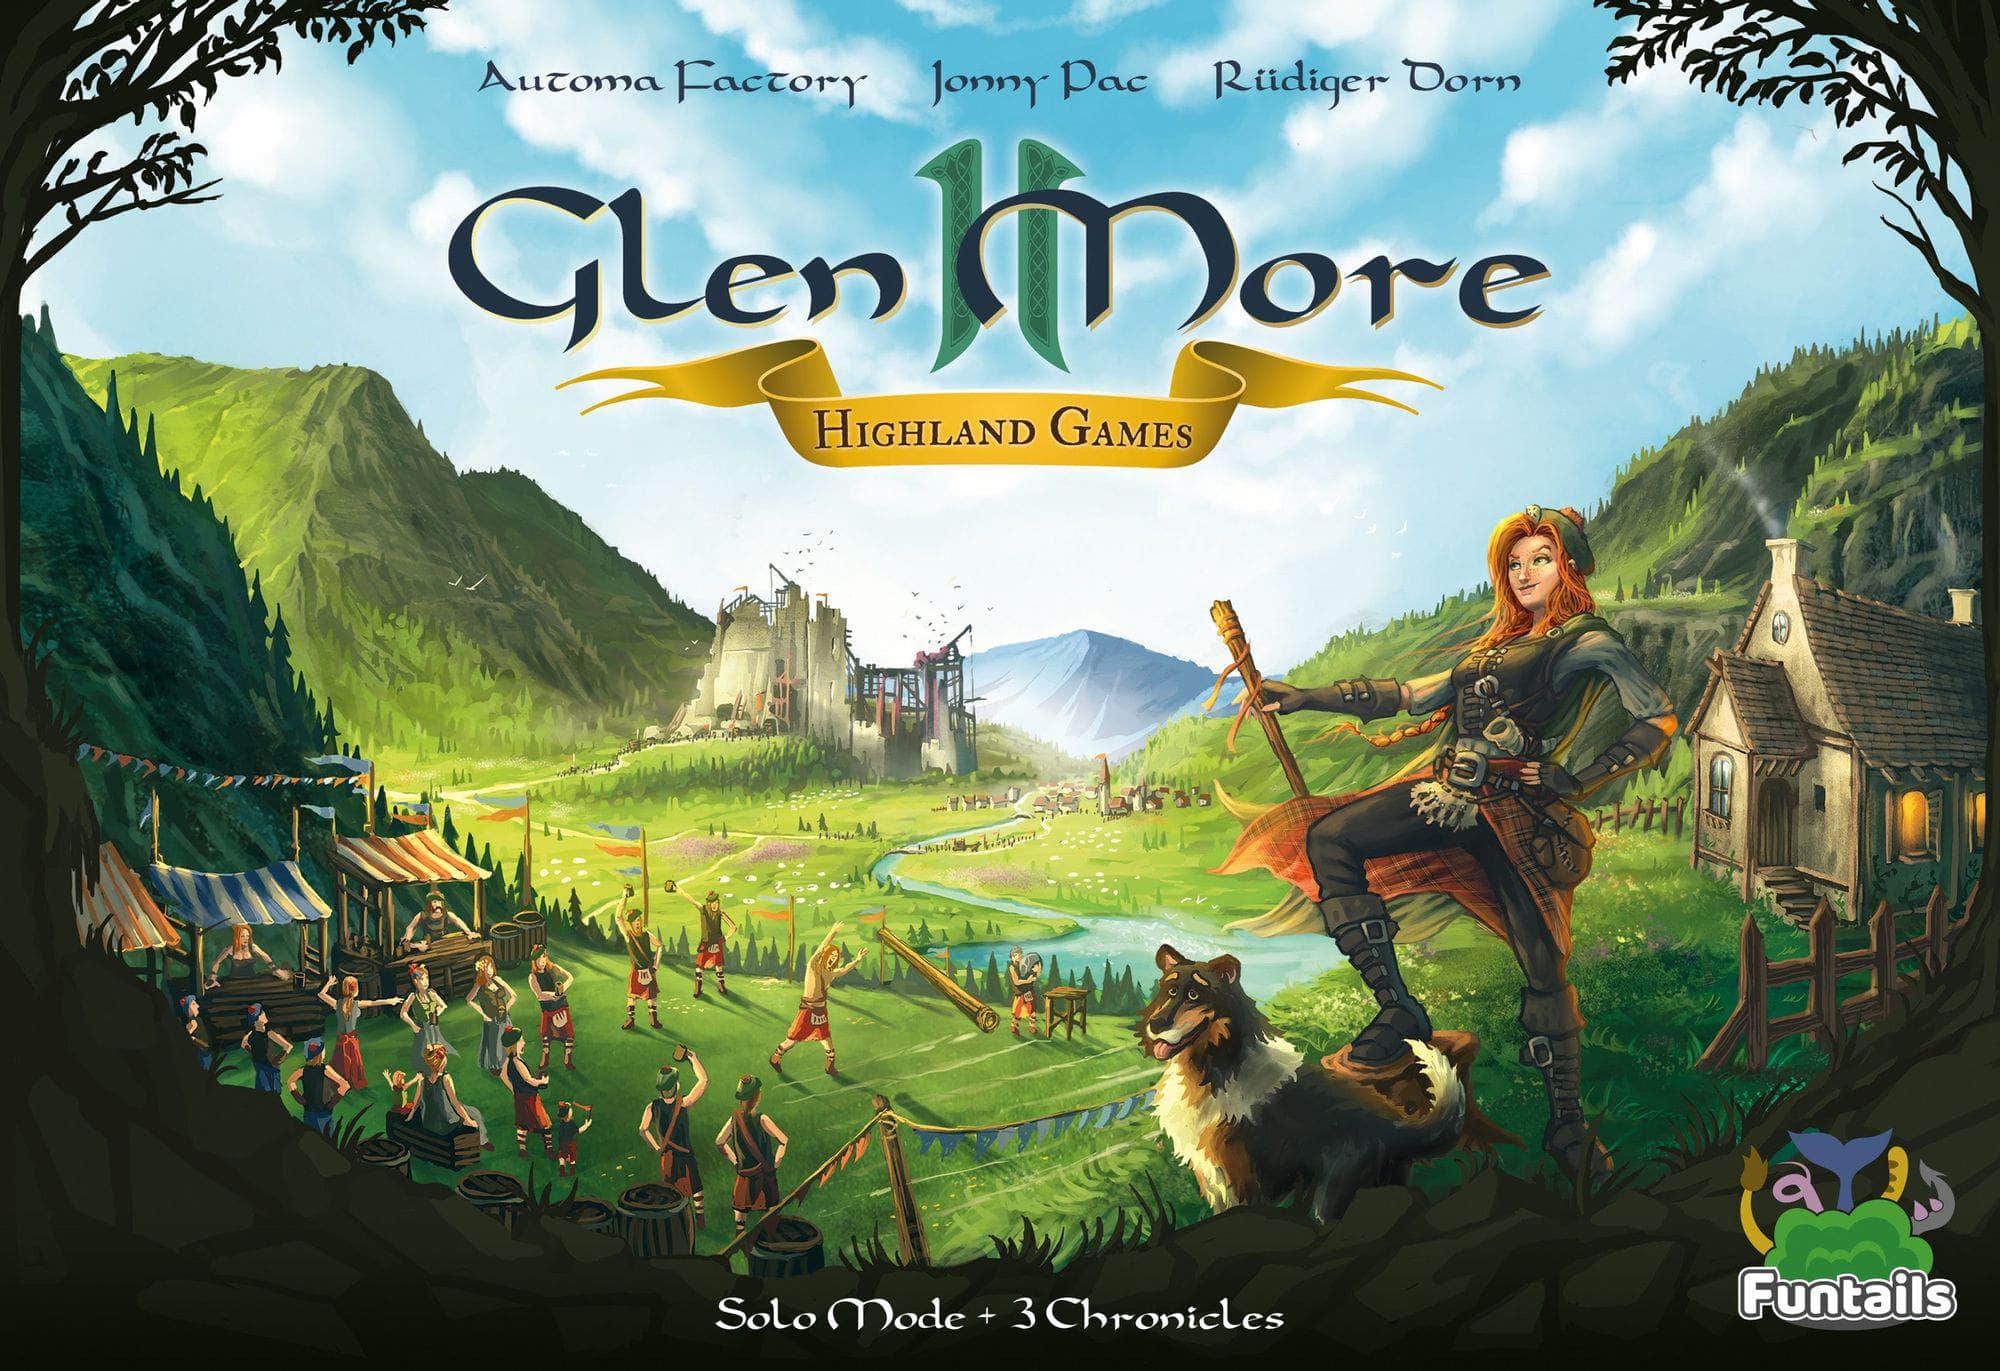 Glen More II Chronicles: การขยายตัวของเกมไฮแลนด์พร้อมโปรโมชั่น 4 และ 5 บวกชุดเหรียญโลหะ (Kickstarter Pre-Order พิเศษ) Kickstarter Game Expansion Funtails GmbH KS001044B